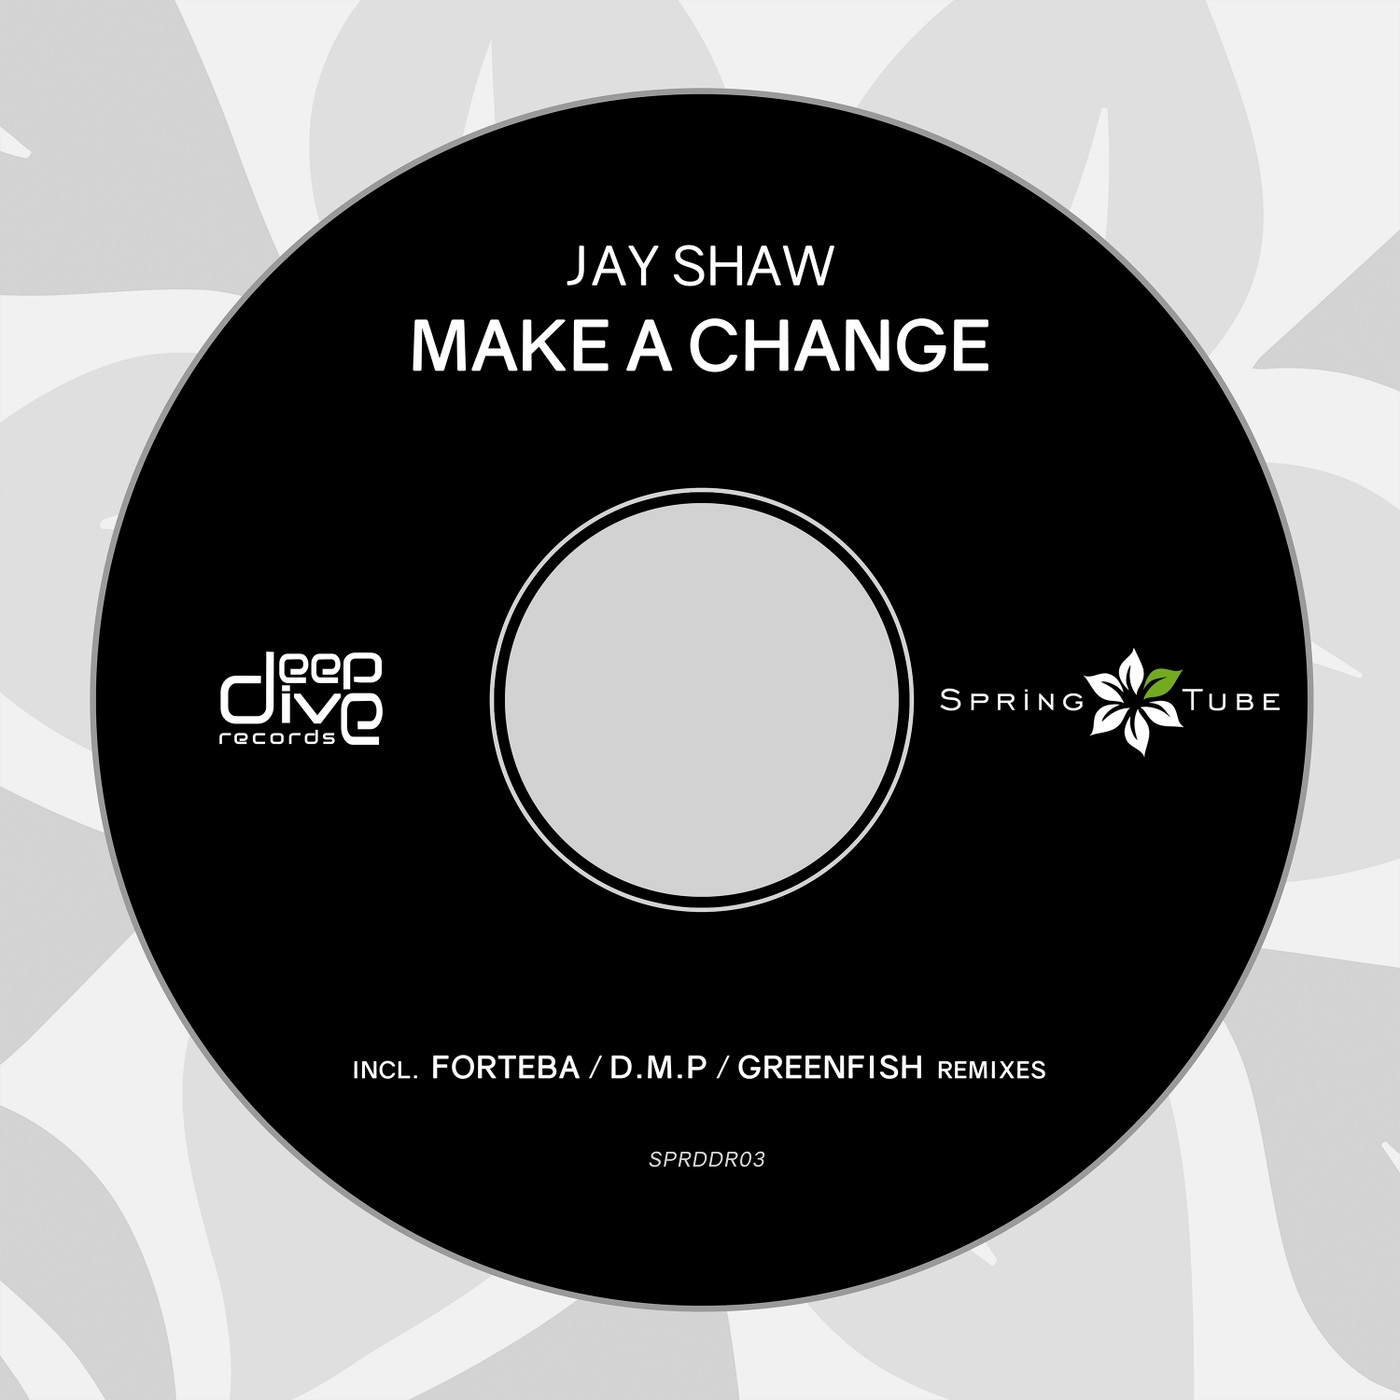 Jay Shaw - Make a Change / Spring Tube